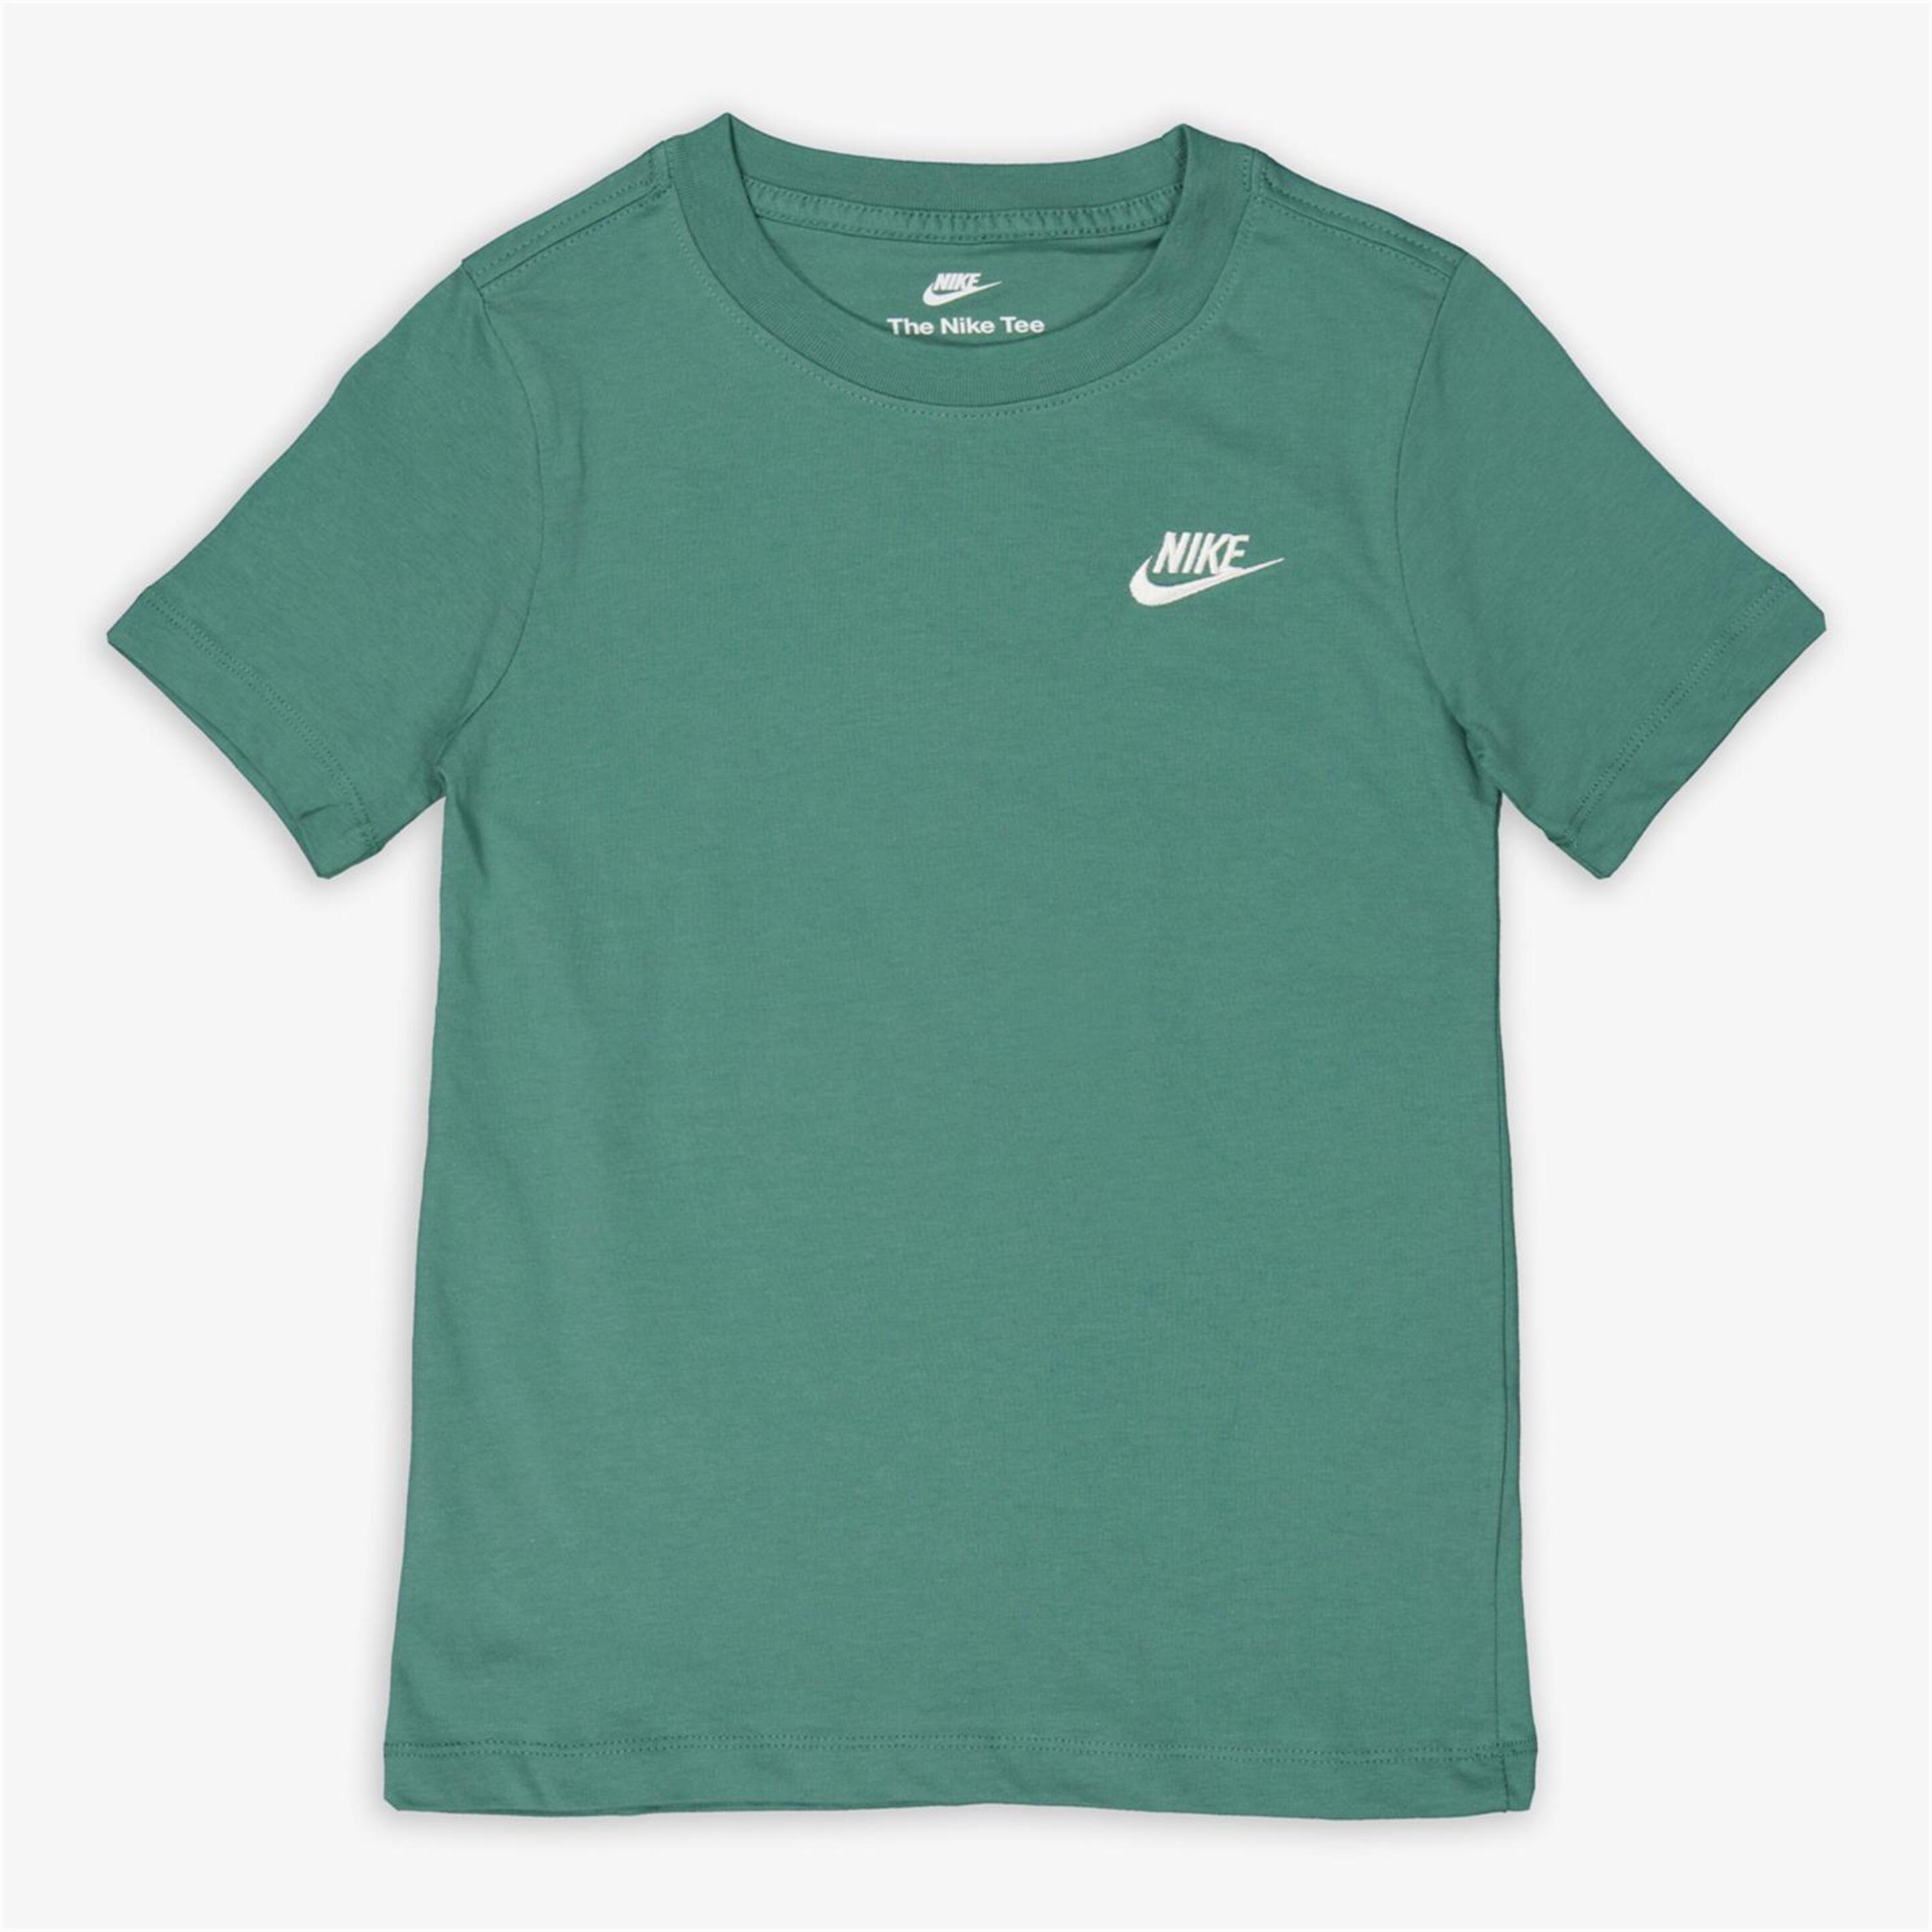 Camiseta Nike - verde - Camiseta Niño